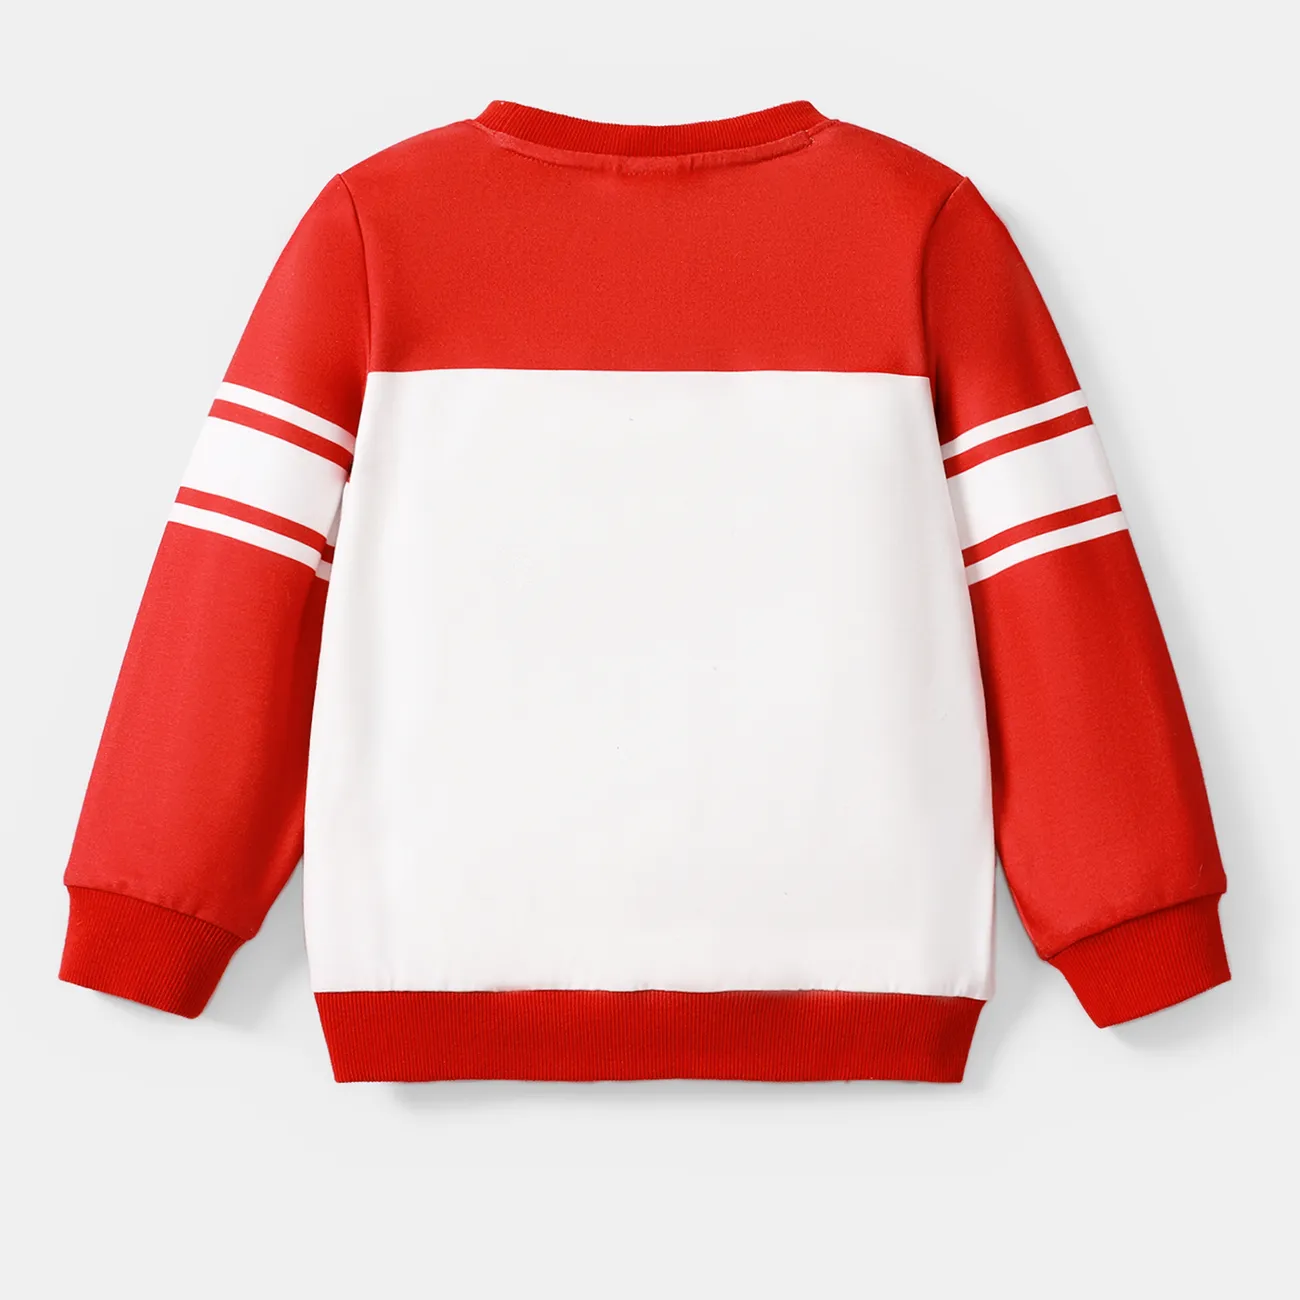 PAW Patrol Toddler Girl/Boy Naia™ Character Print Pullover Sweatshirt  Red big image 1